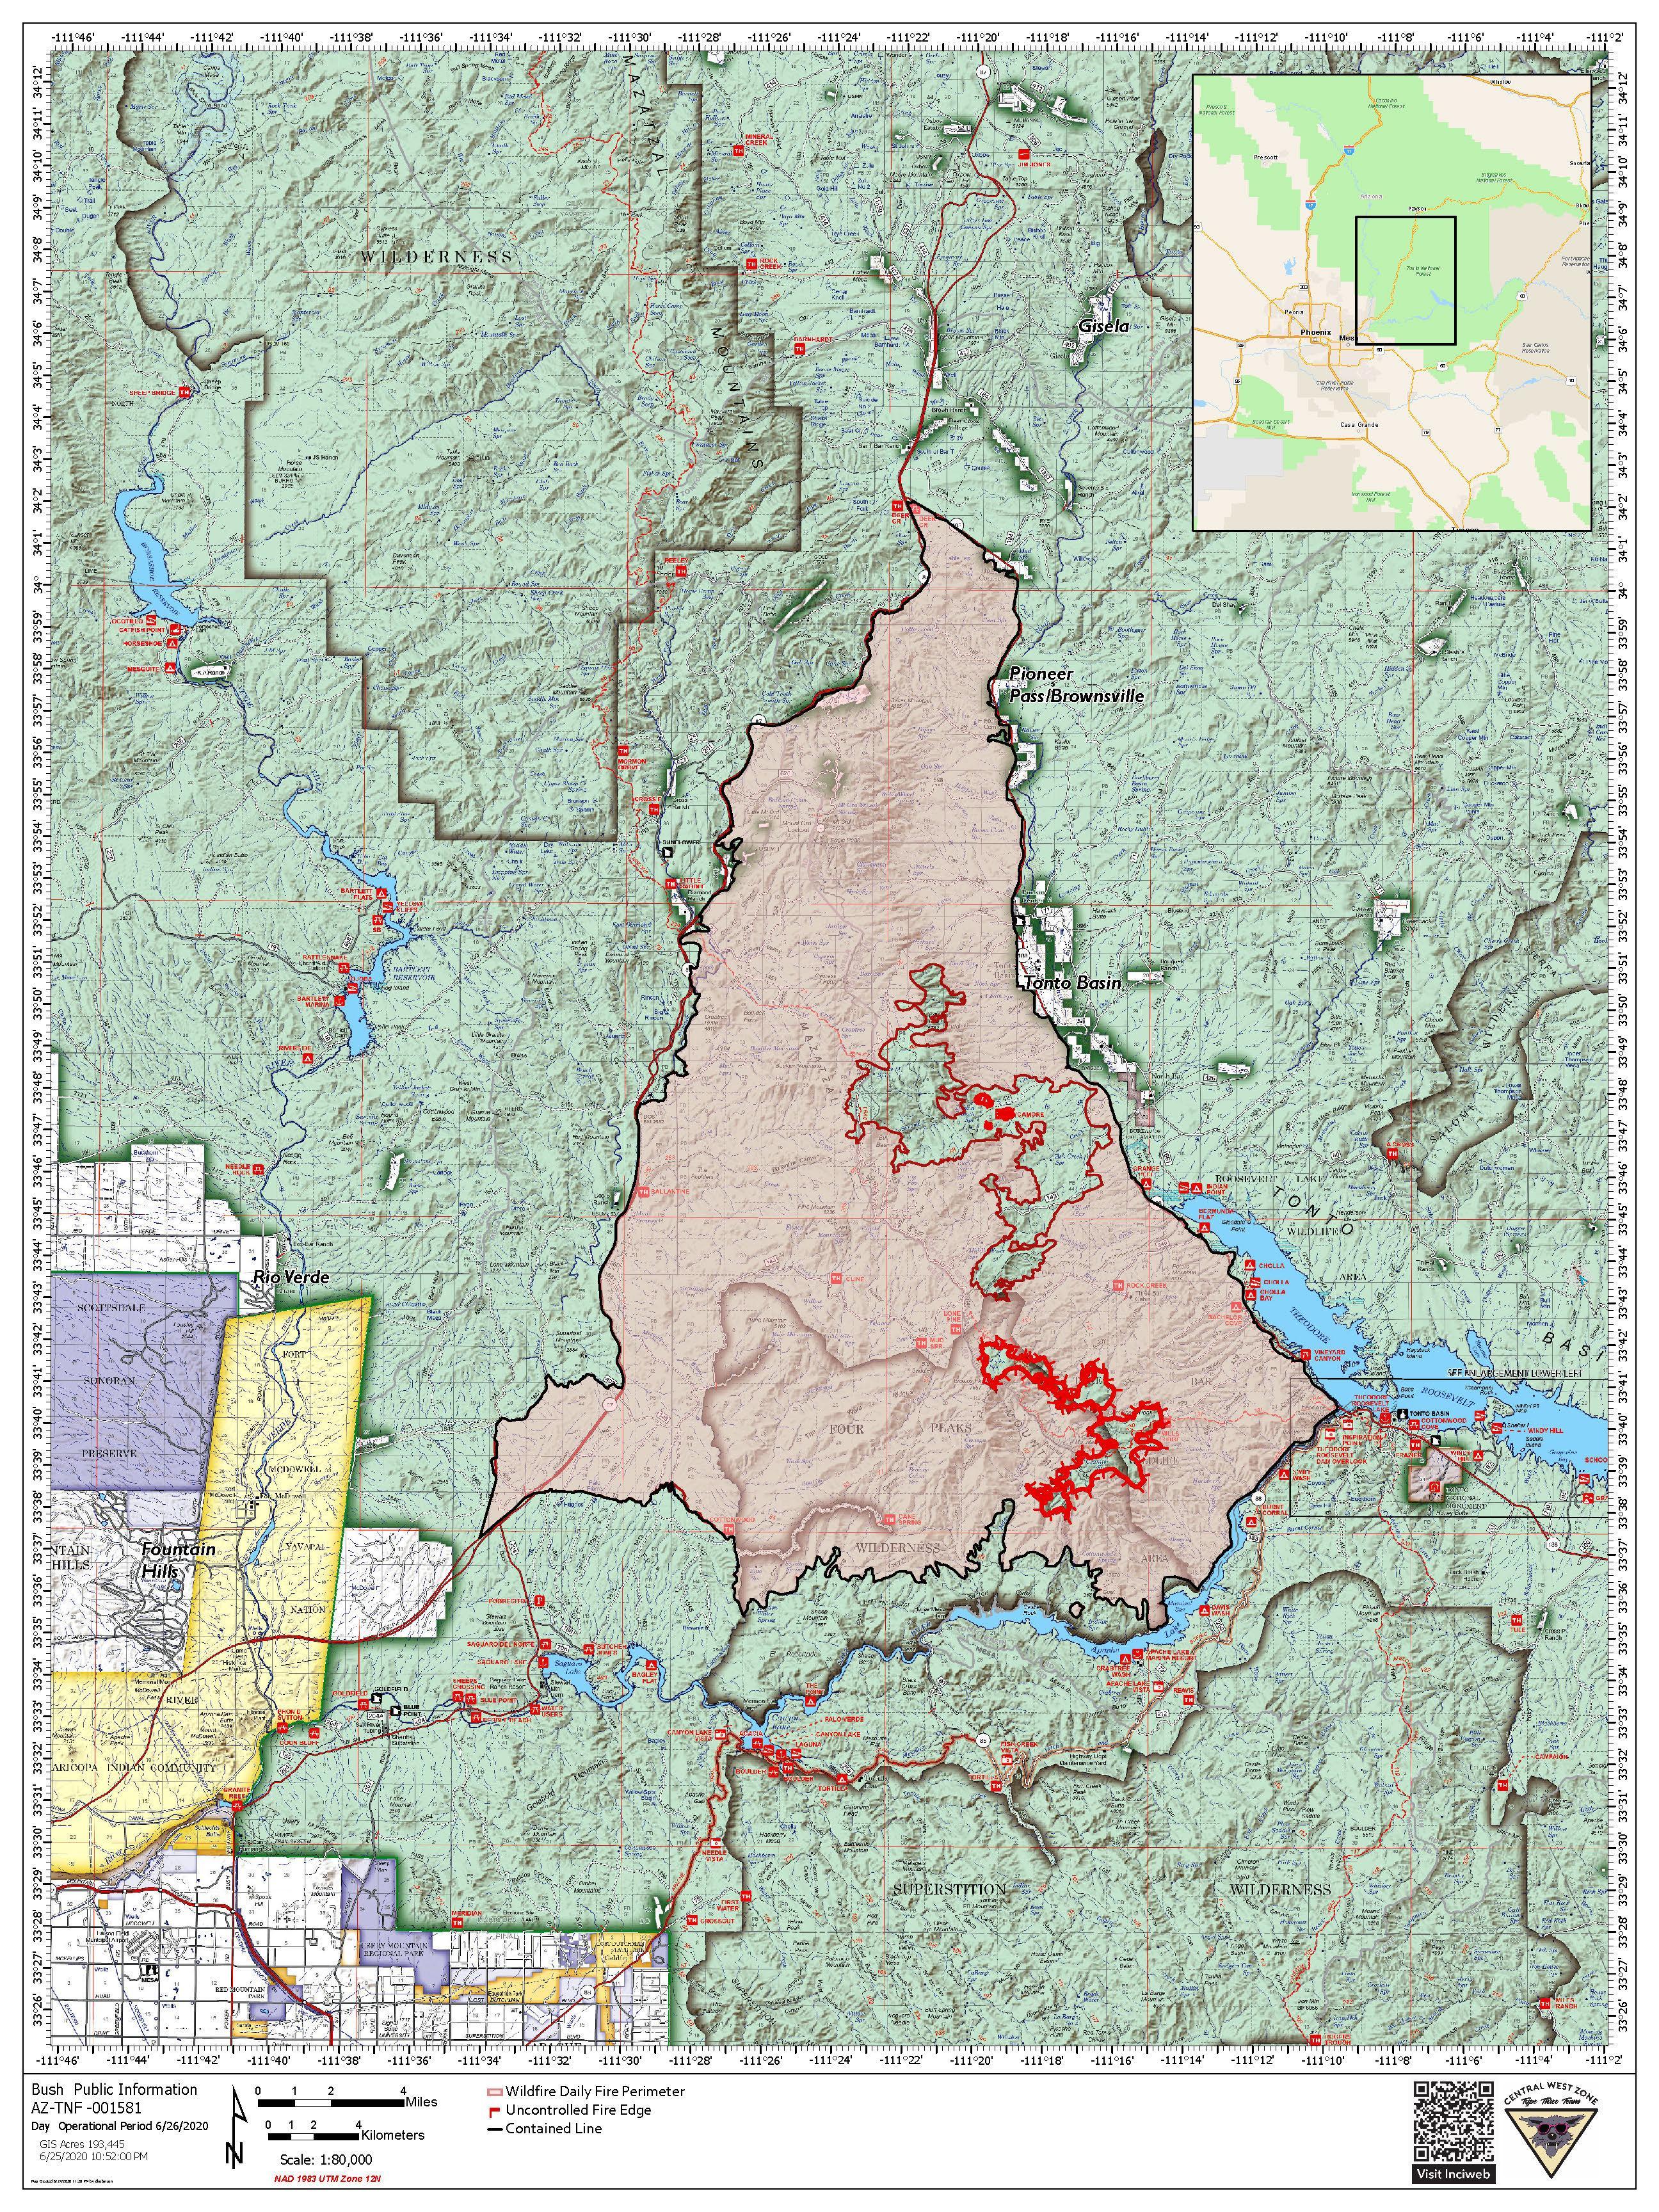 Bush Fire Map 6-28-20